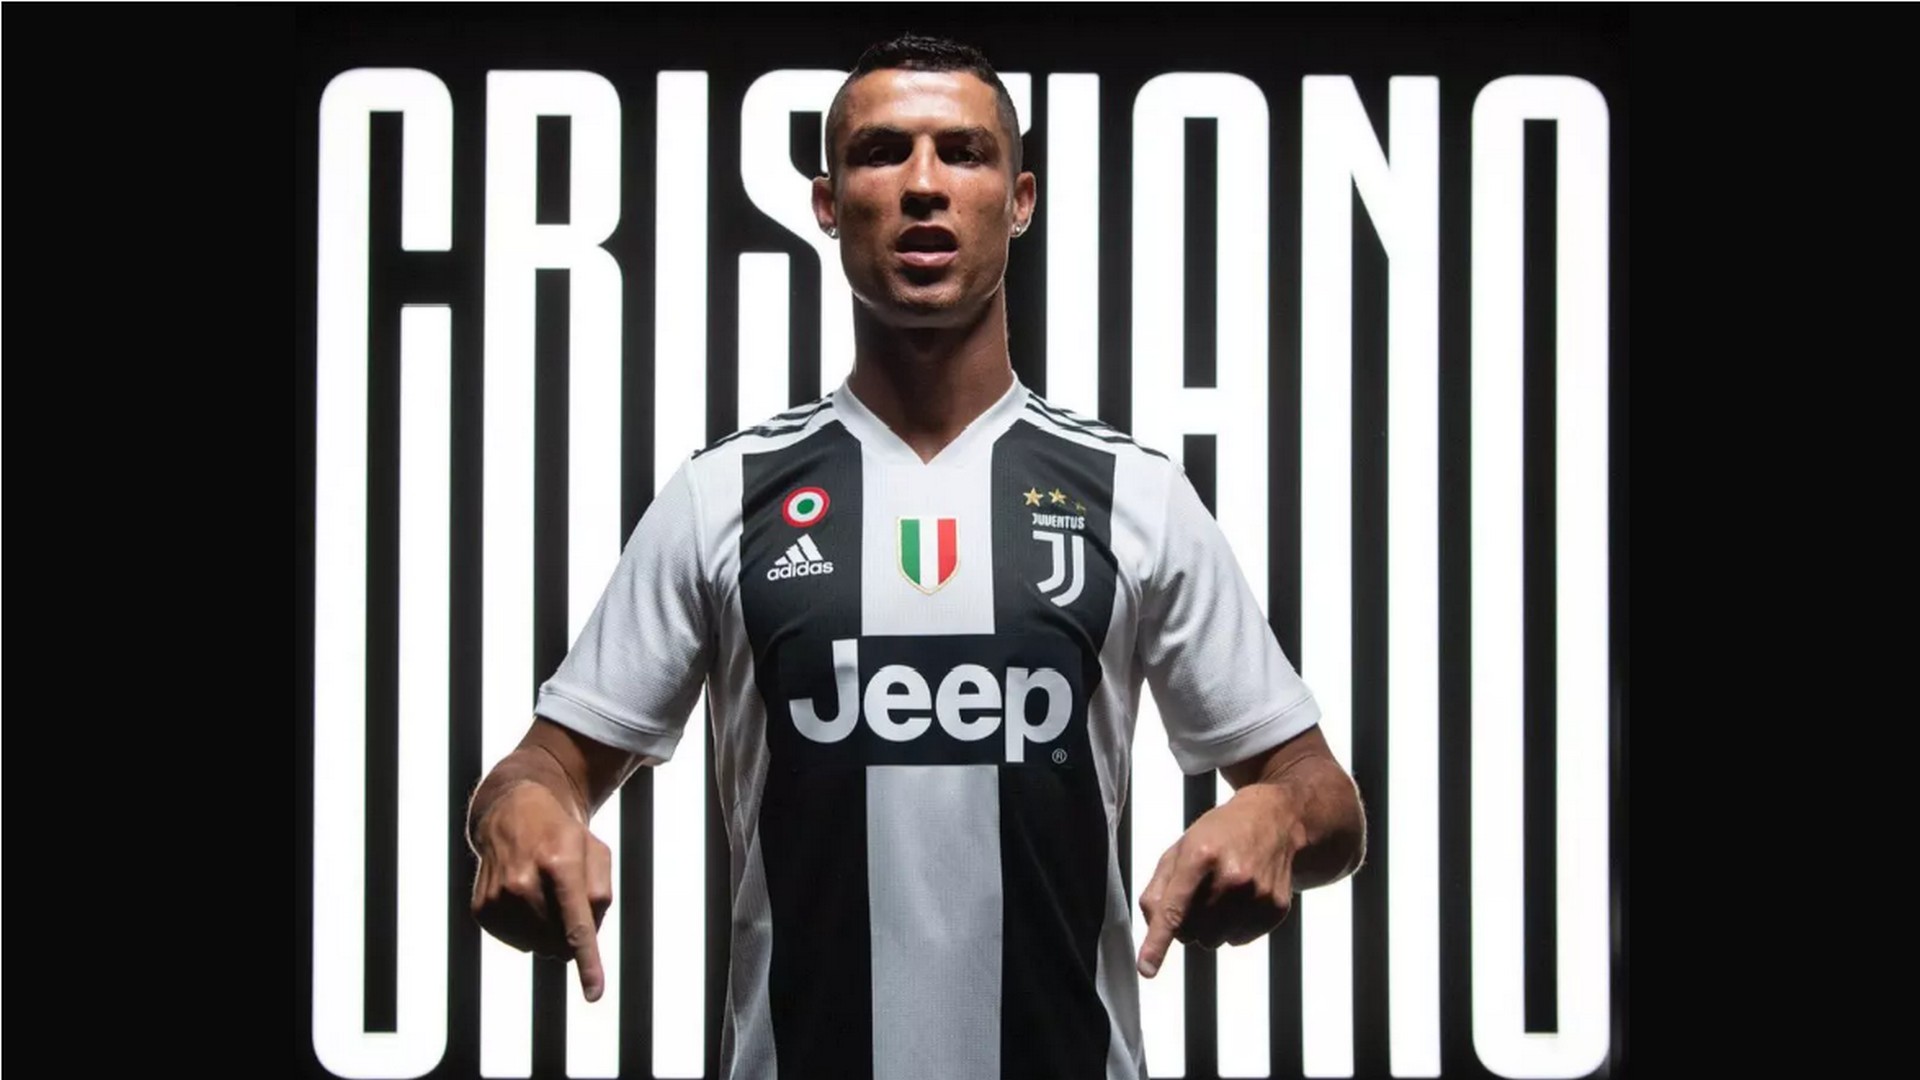 Wallpaper Cristiano Ronaldo Juventus 2020 Cute Wallpapers